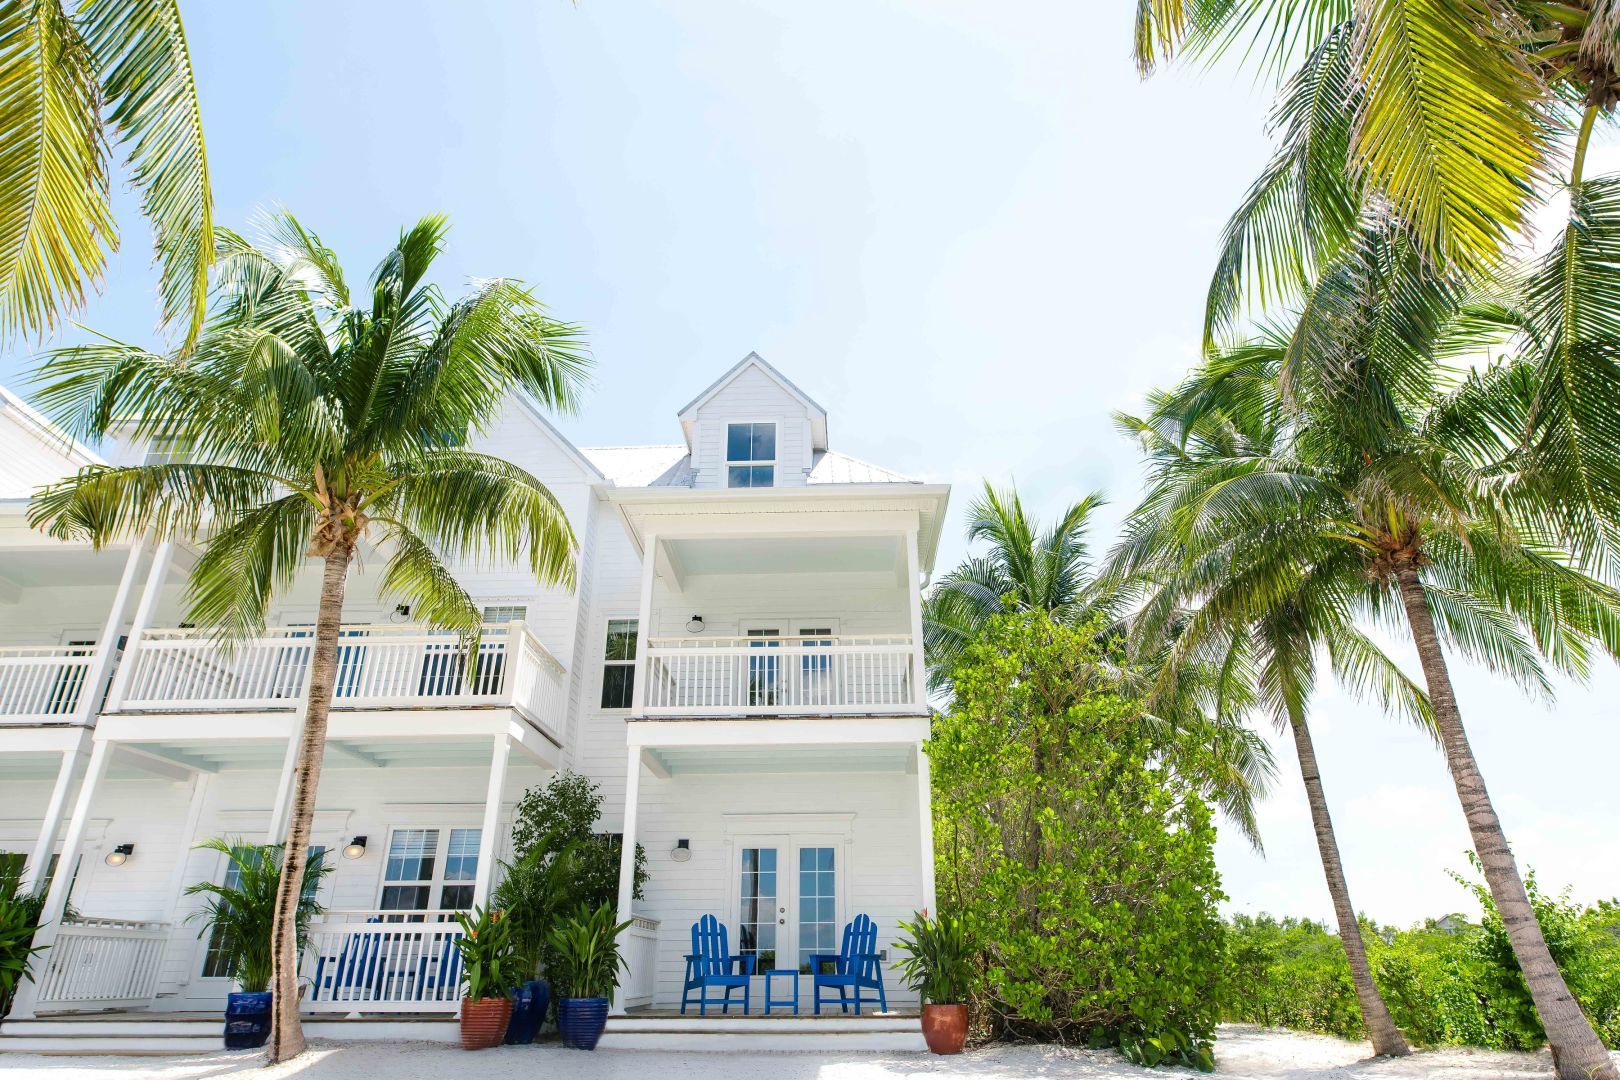 Photo of Parrot Key Hotel & Villas, Key West, FL